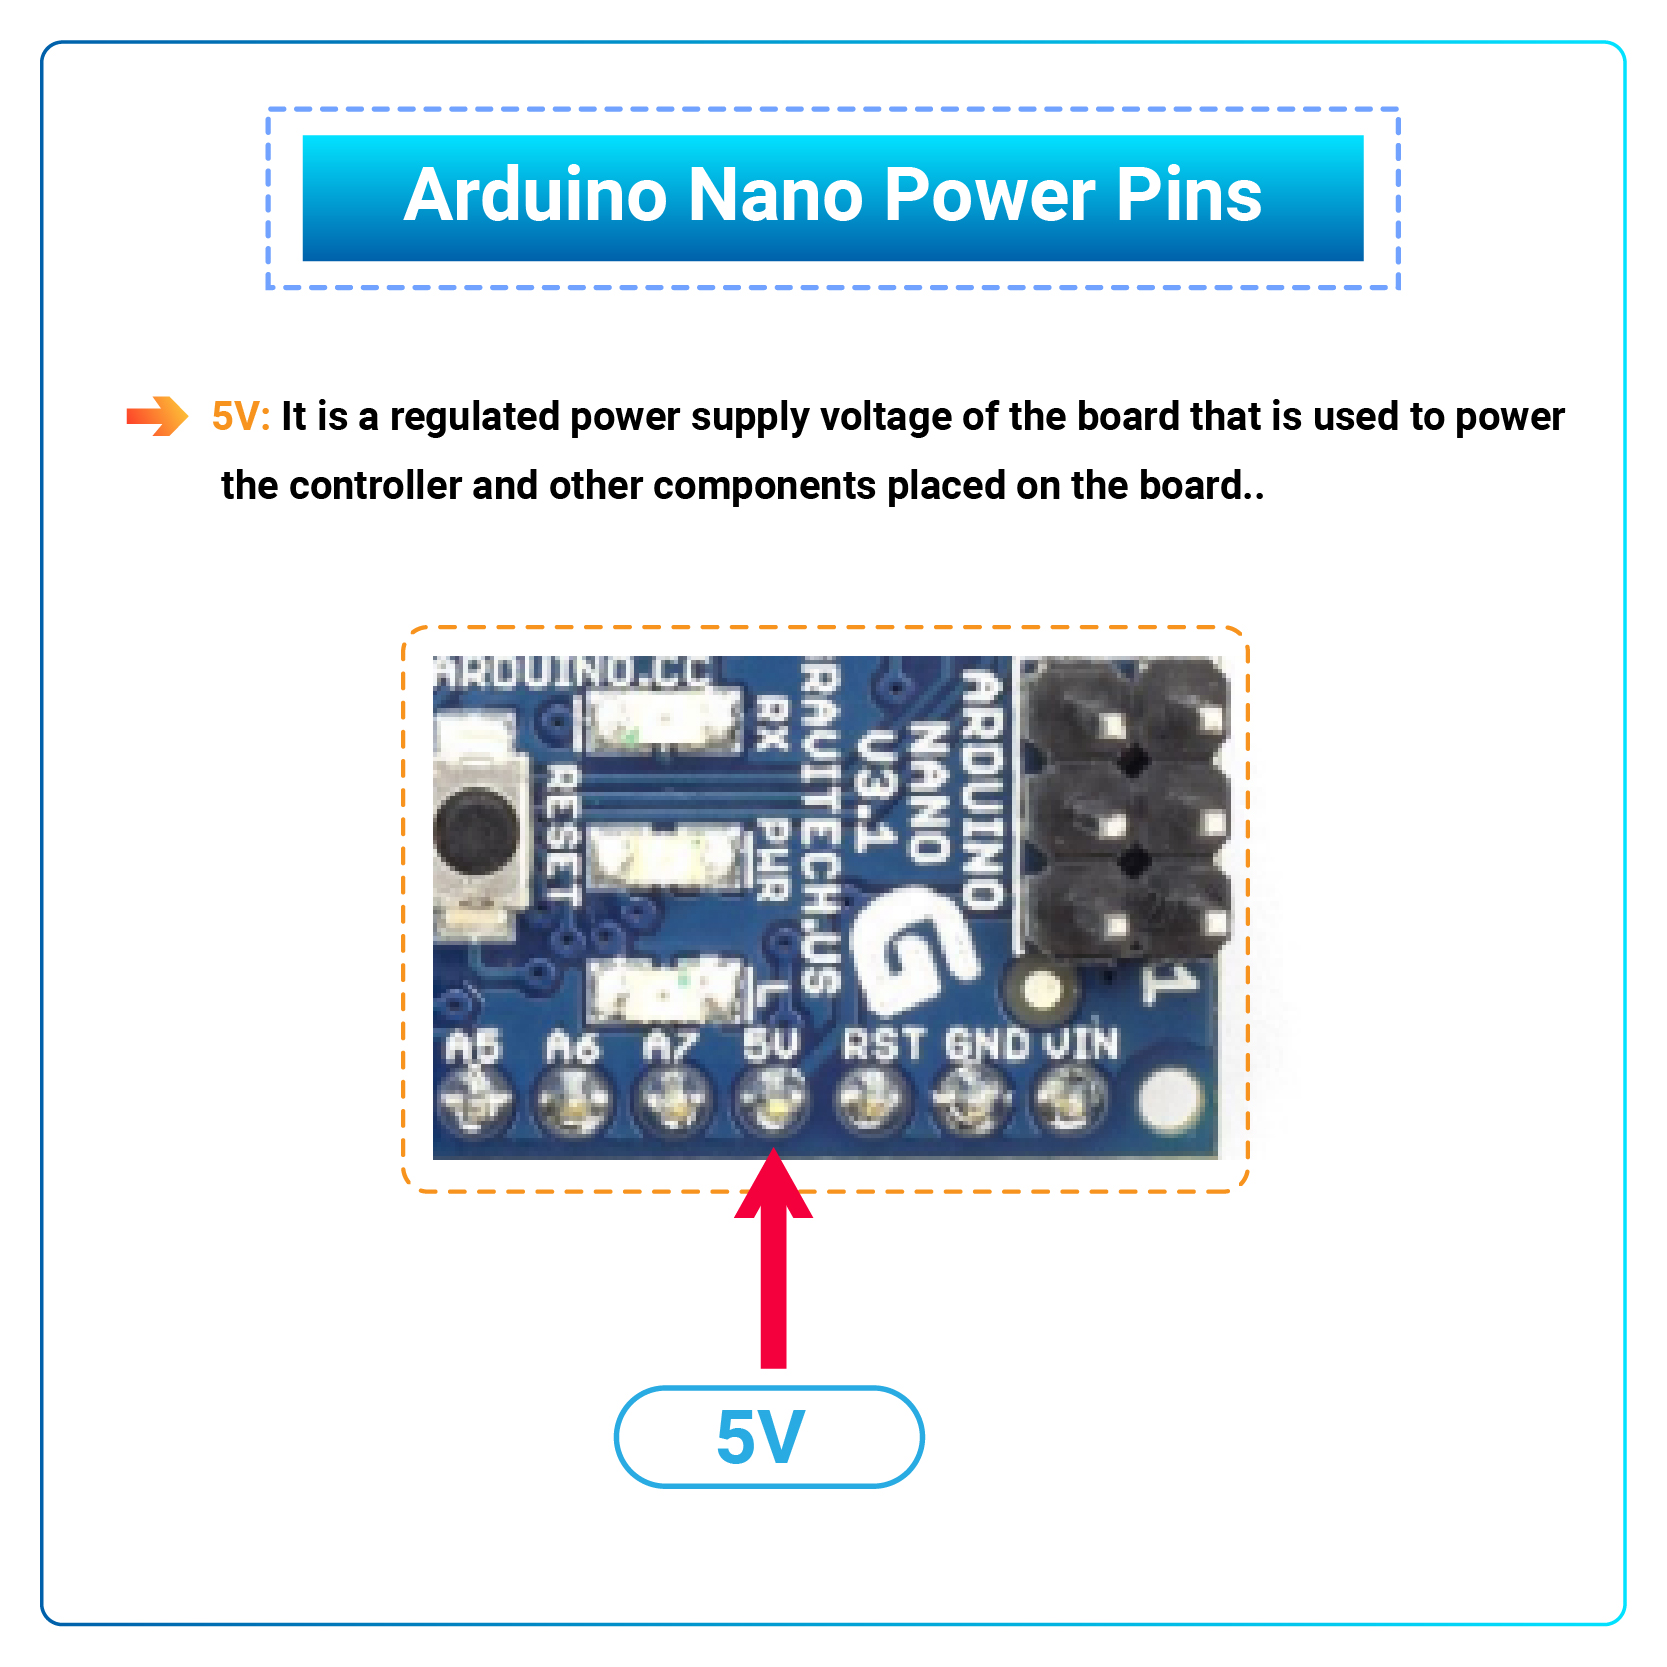 Introduction to arduino nano, intro to arduino nano, pin diagram of arduino nano, applications of arduino nano, arduino nano pinout, difference between Arduino nano and Arduino uno, arduino nano specifications, arduino nano 5V pin, nano power pins